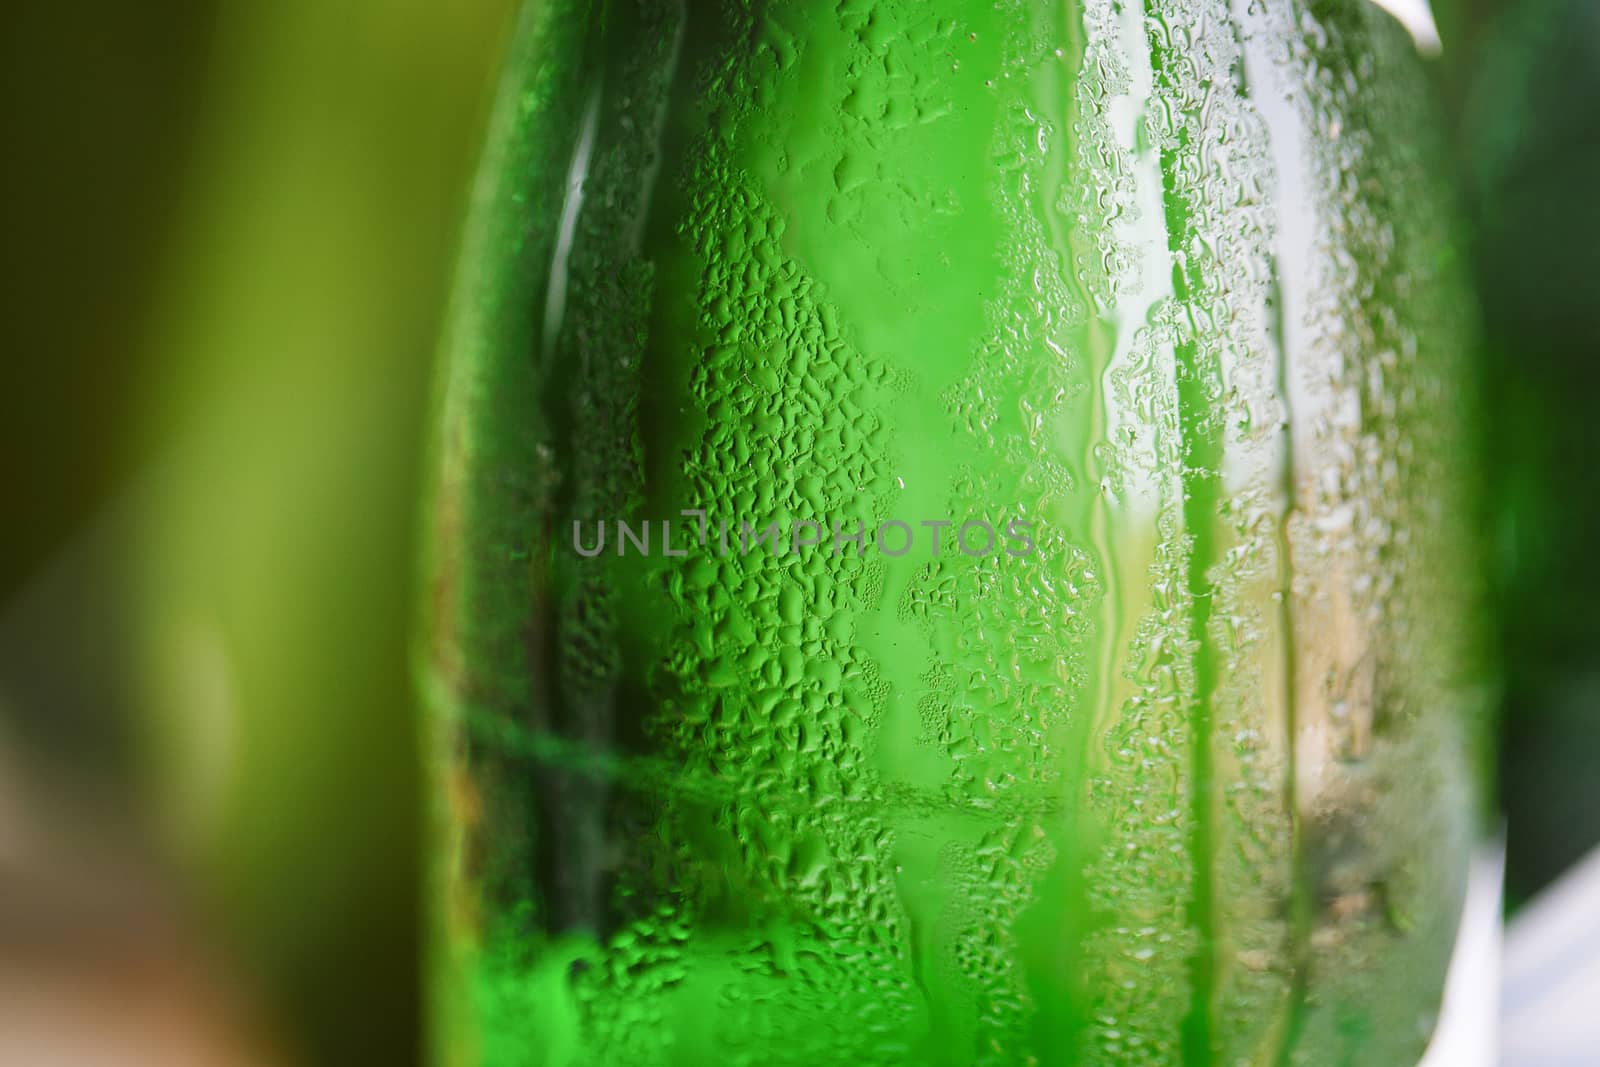 Green glass bottle by gorov108